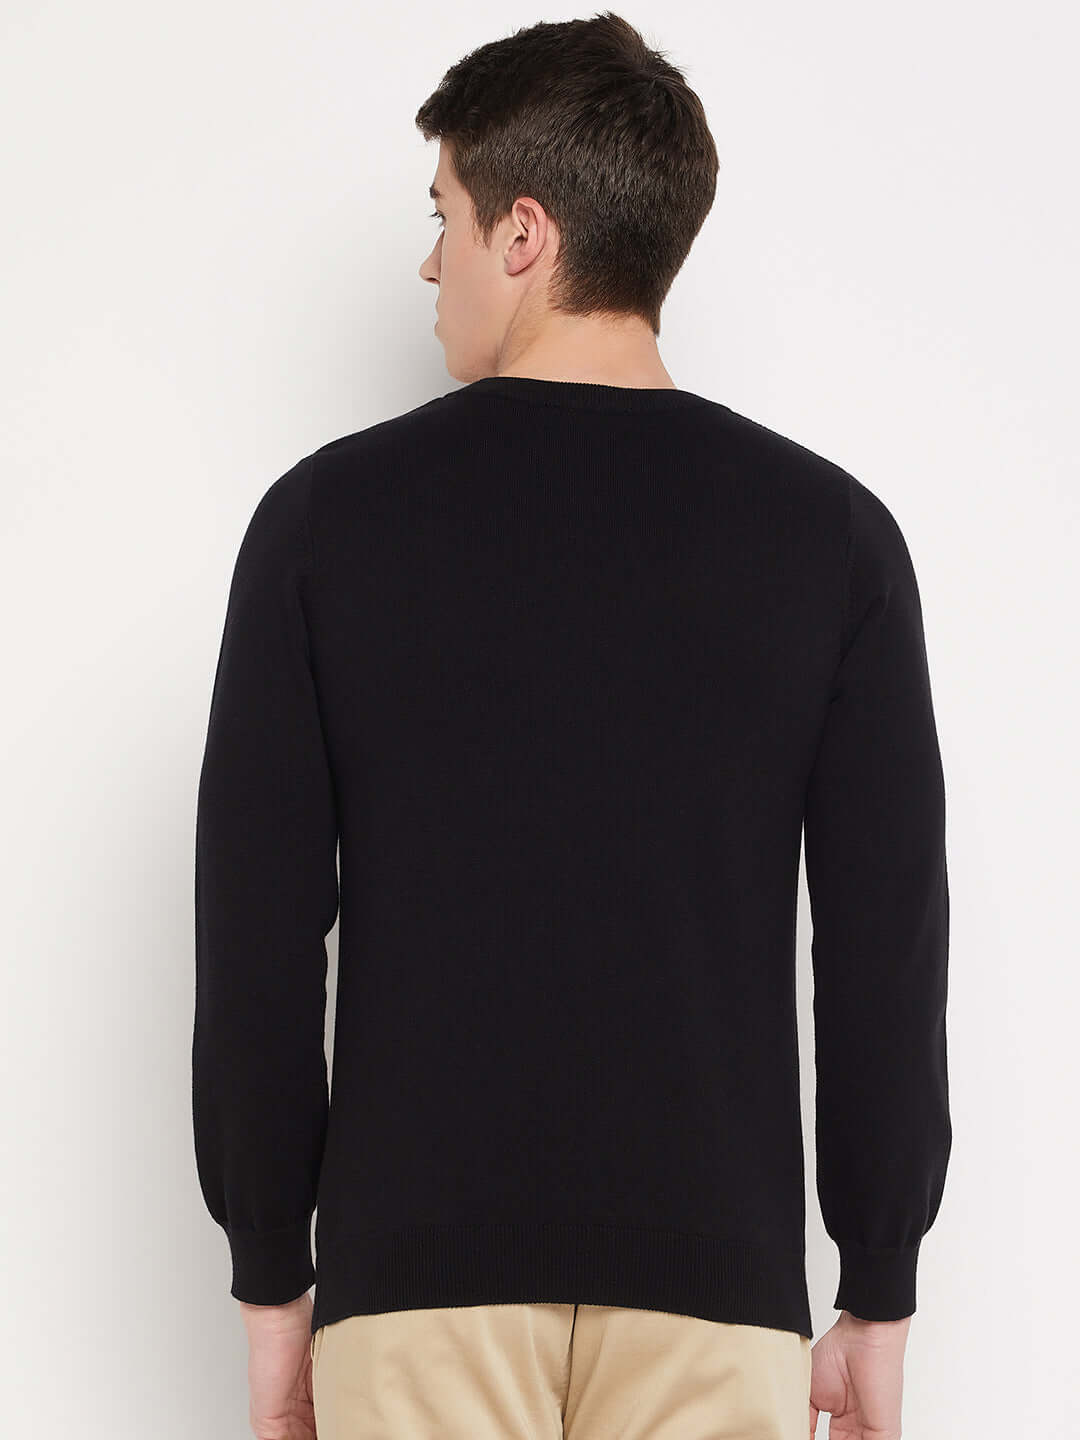 Camla Barcelona Black Sweater For Men